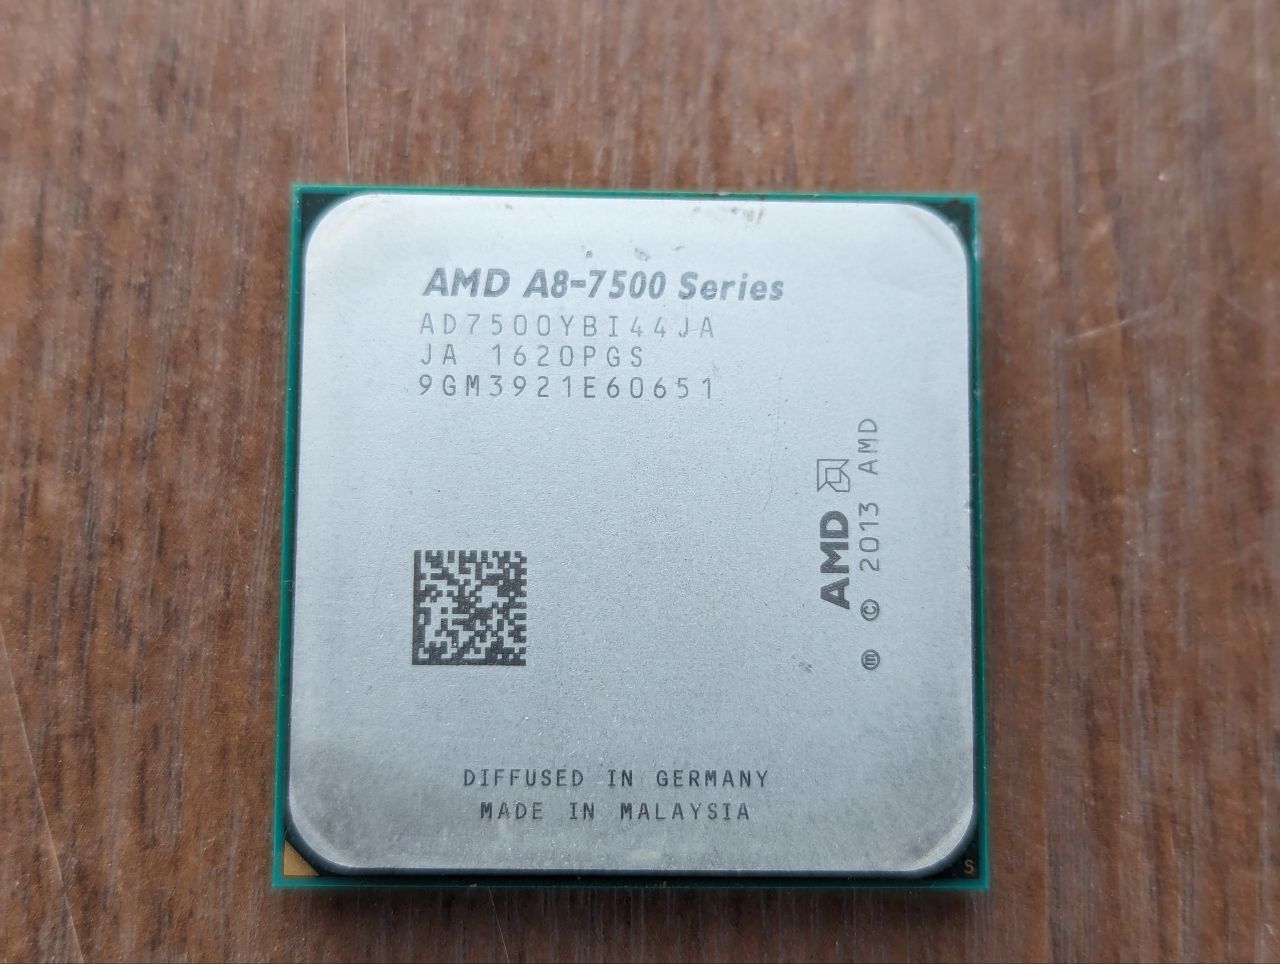 AMDПроцессордлякомпьютераA8-7500(4ядра,4потока,3000МГц,сокетFM2Plus)OEM(безкулера)